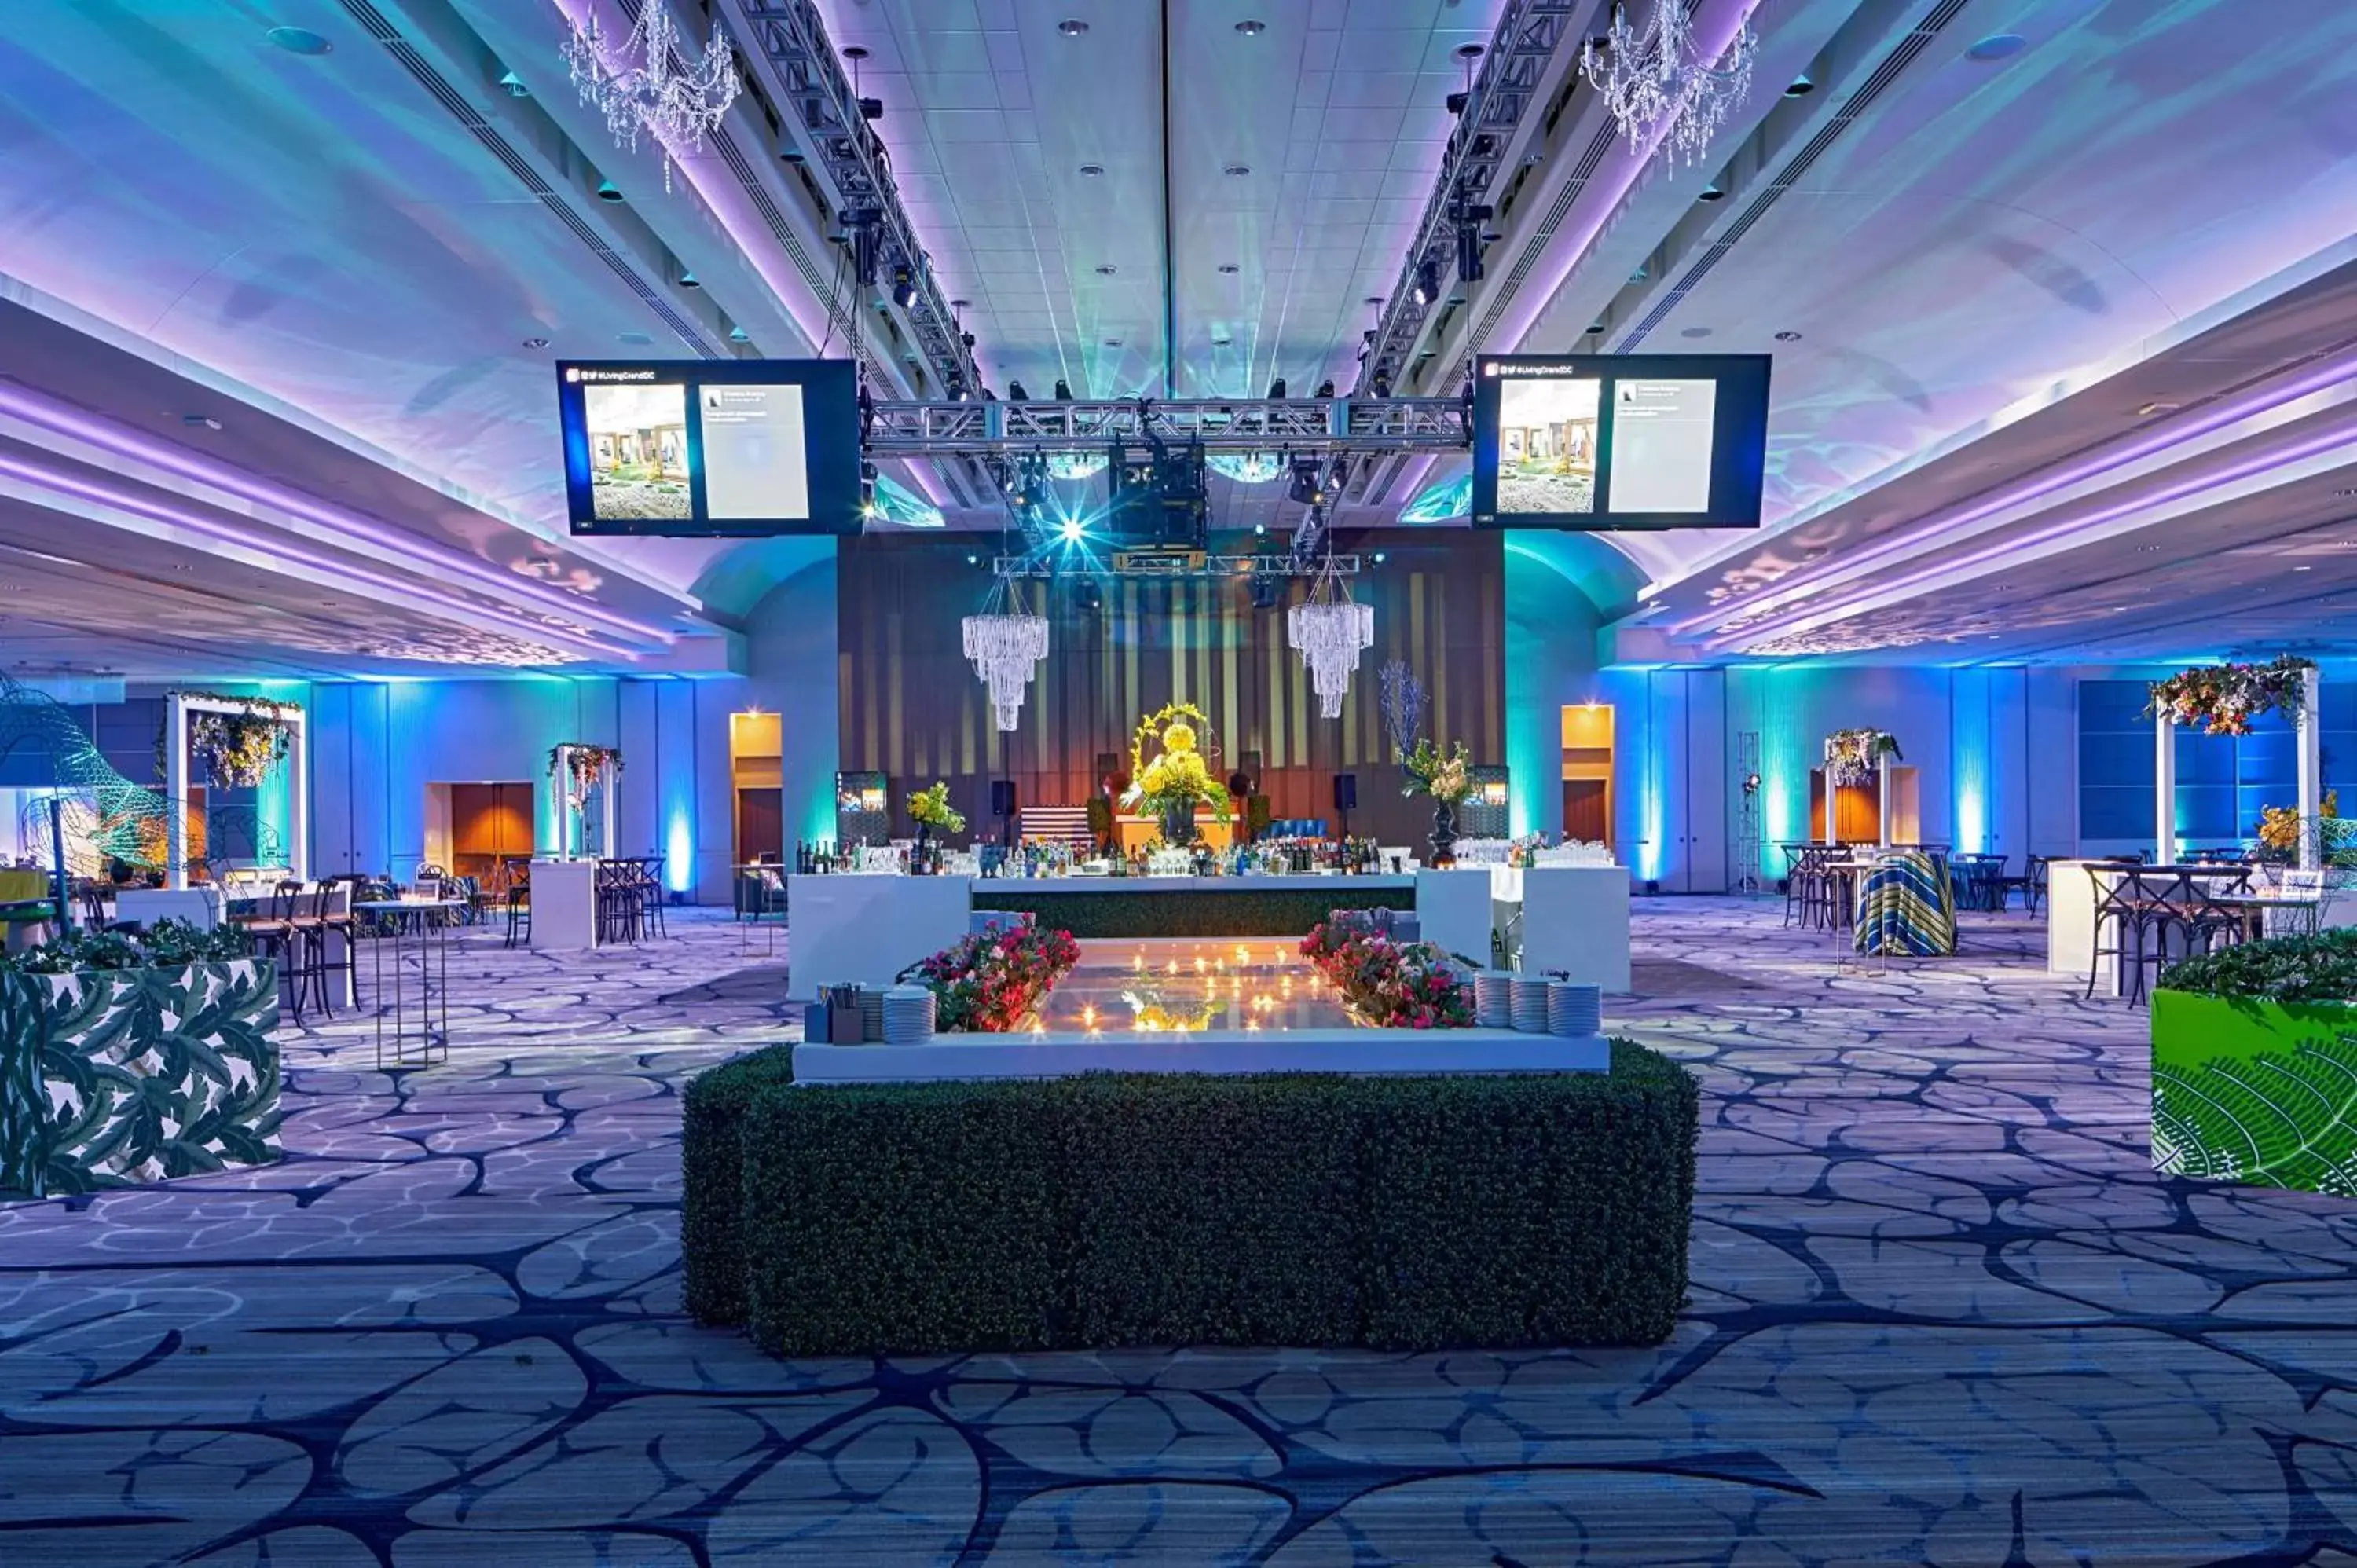 Lobby or reception, Restaurant/Places to Eat in Grand Hyatt Washington